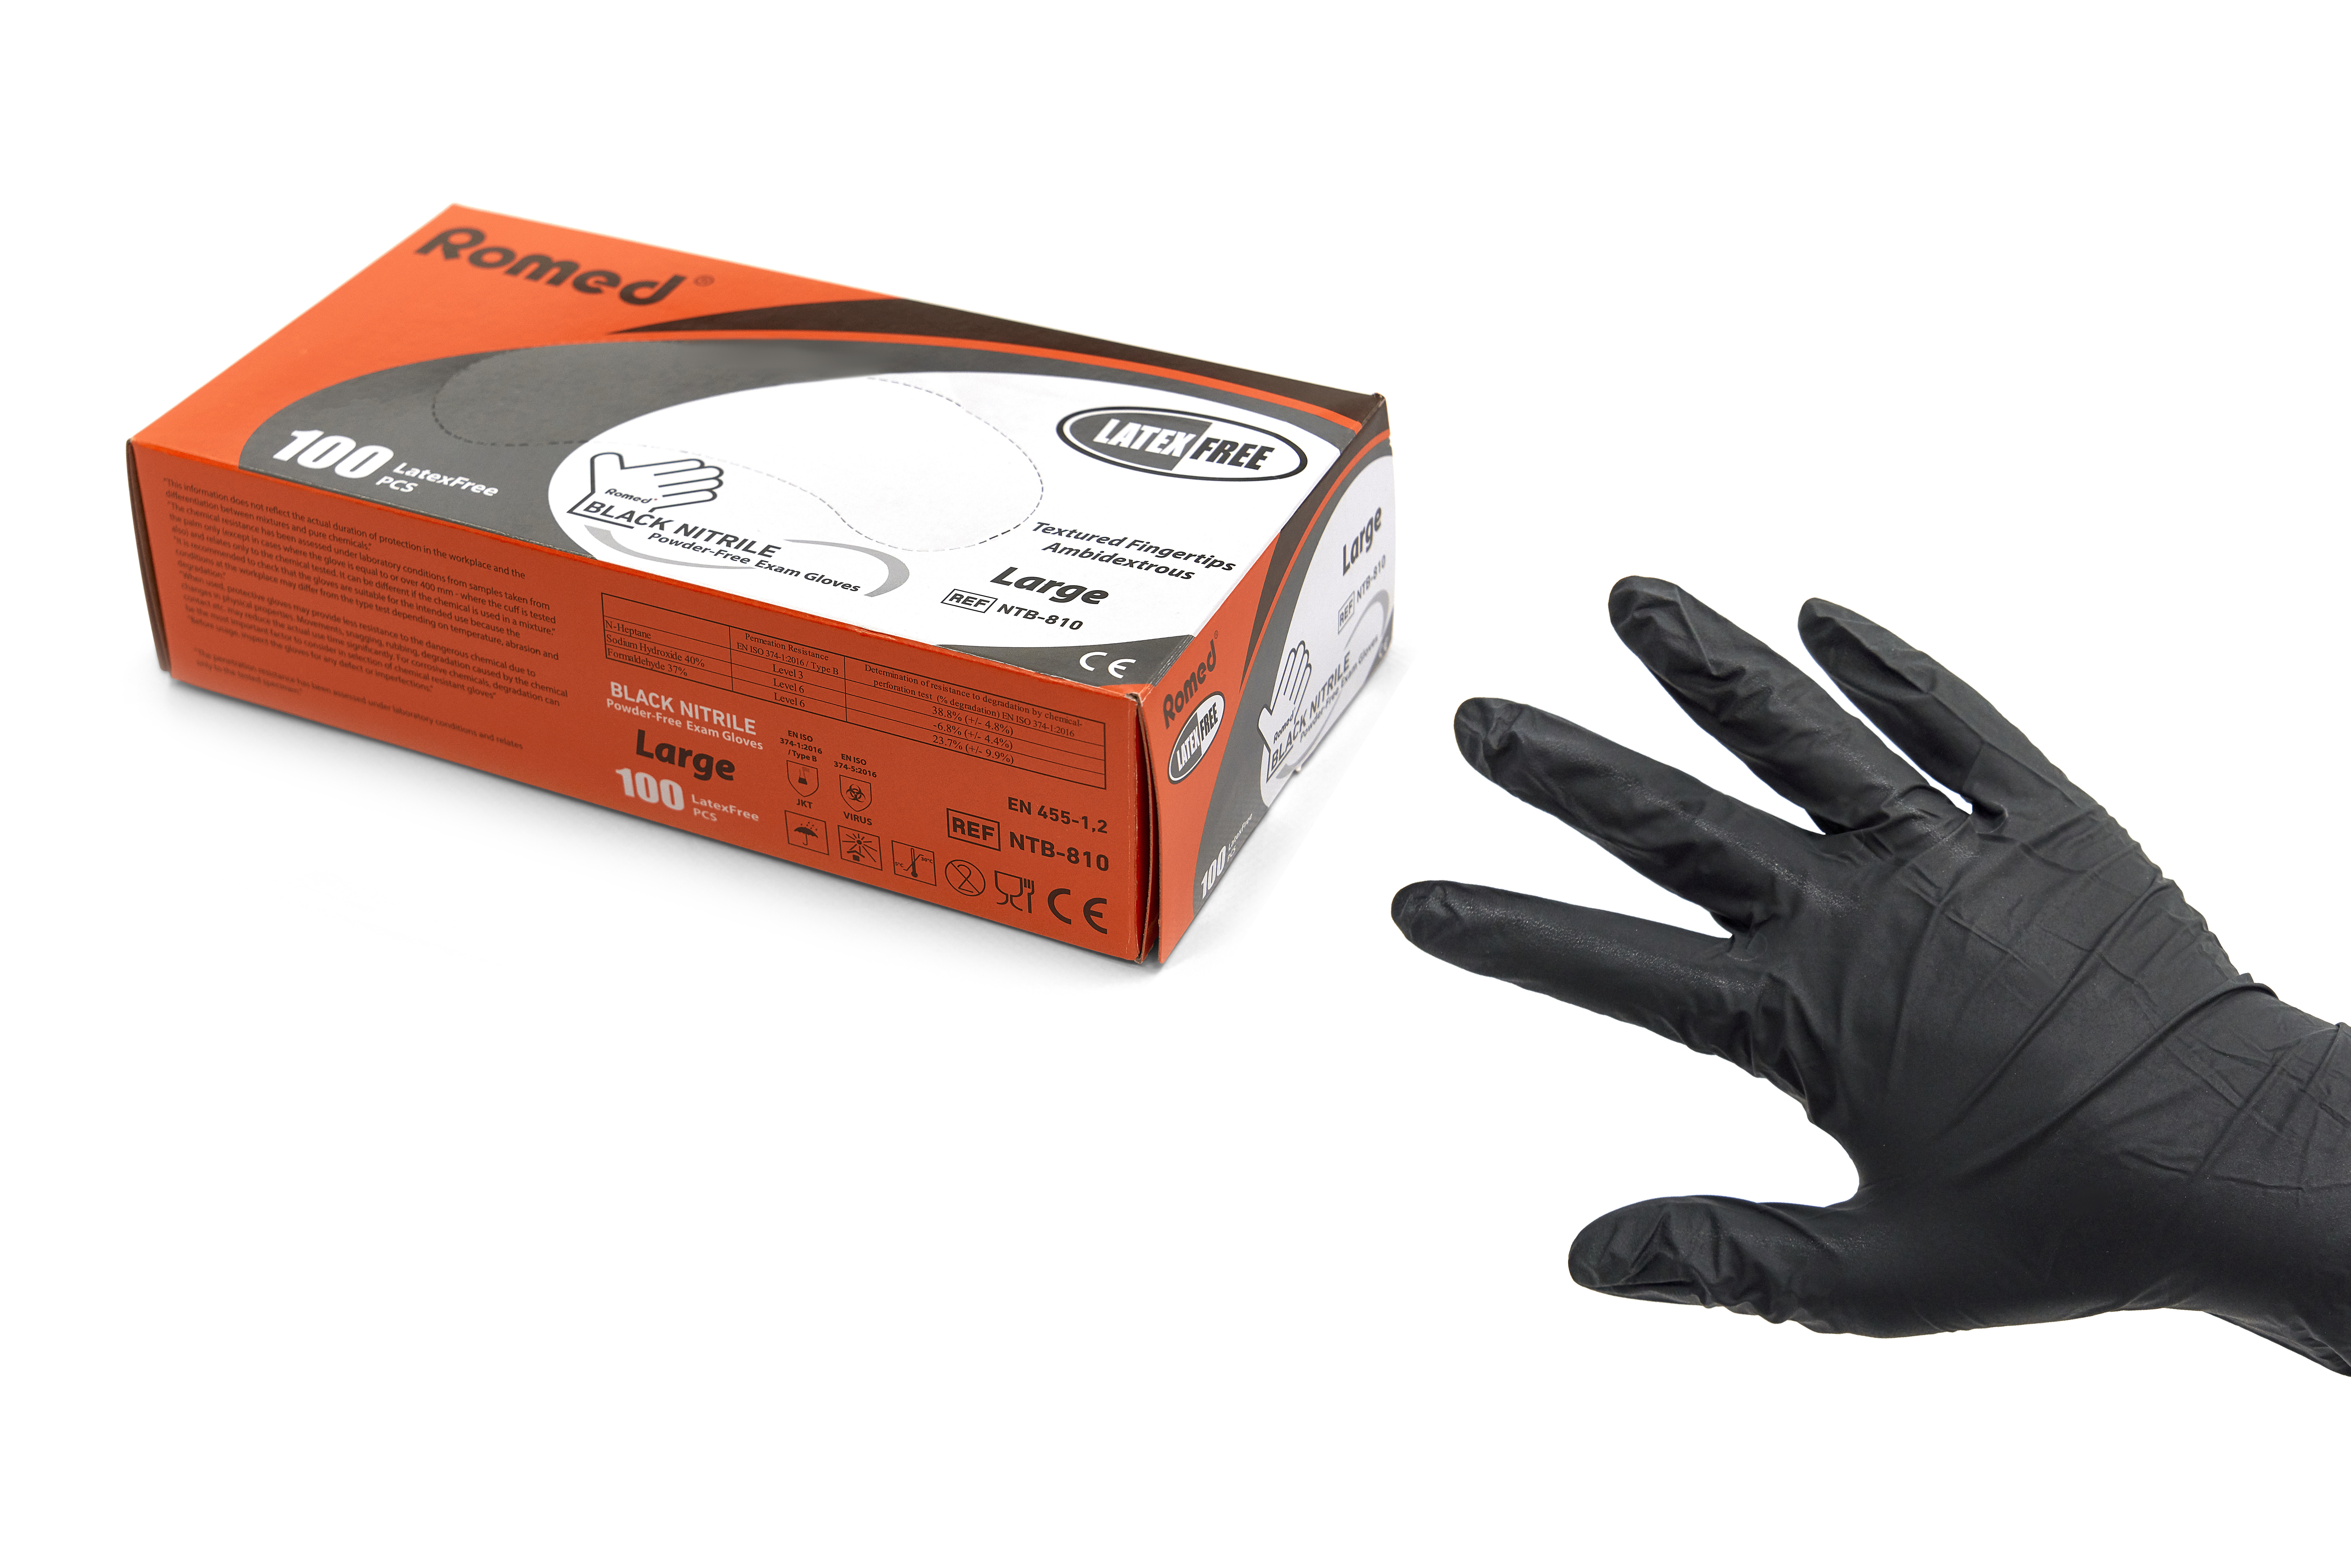 NTB-805 Romed nitrile examination gloves, non sterile, powderfree, black, medium, per 100 pcs in a dispenser box, 10 x 100 pcs = 1.000 pcs in a carton.